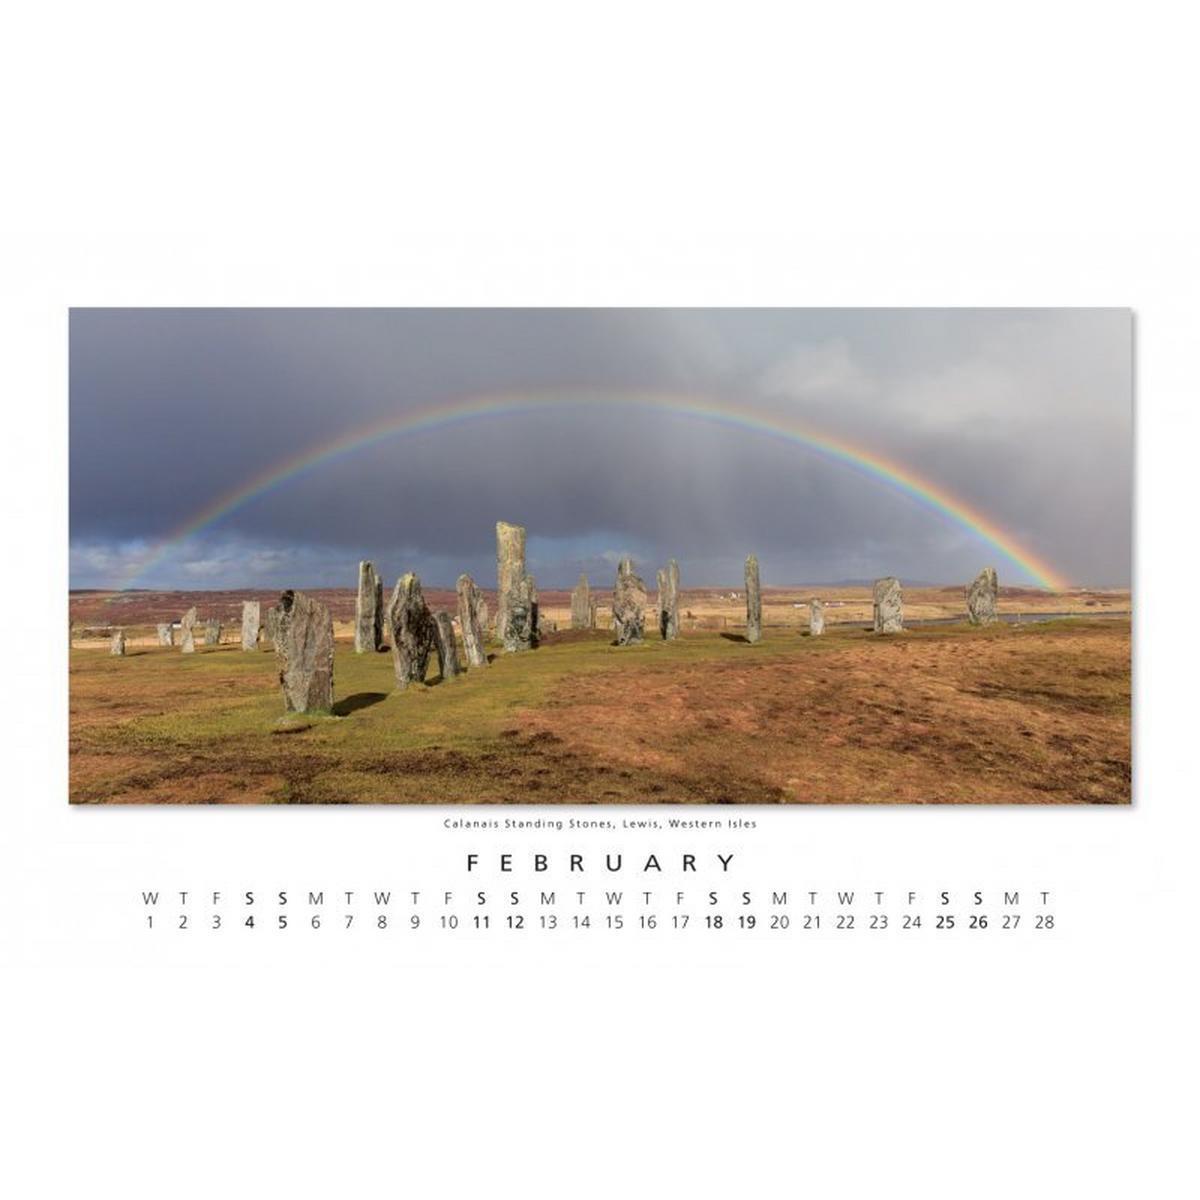 Colin Baxter 2023 Scotland Panorama Calendar